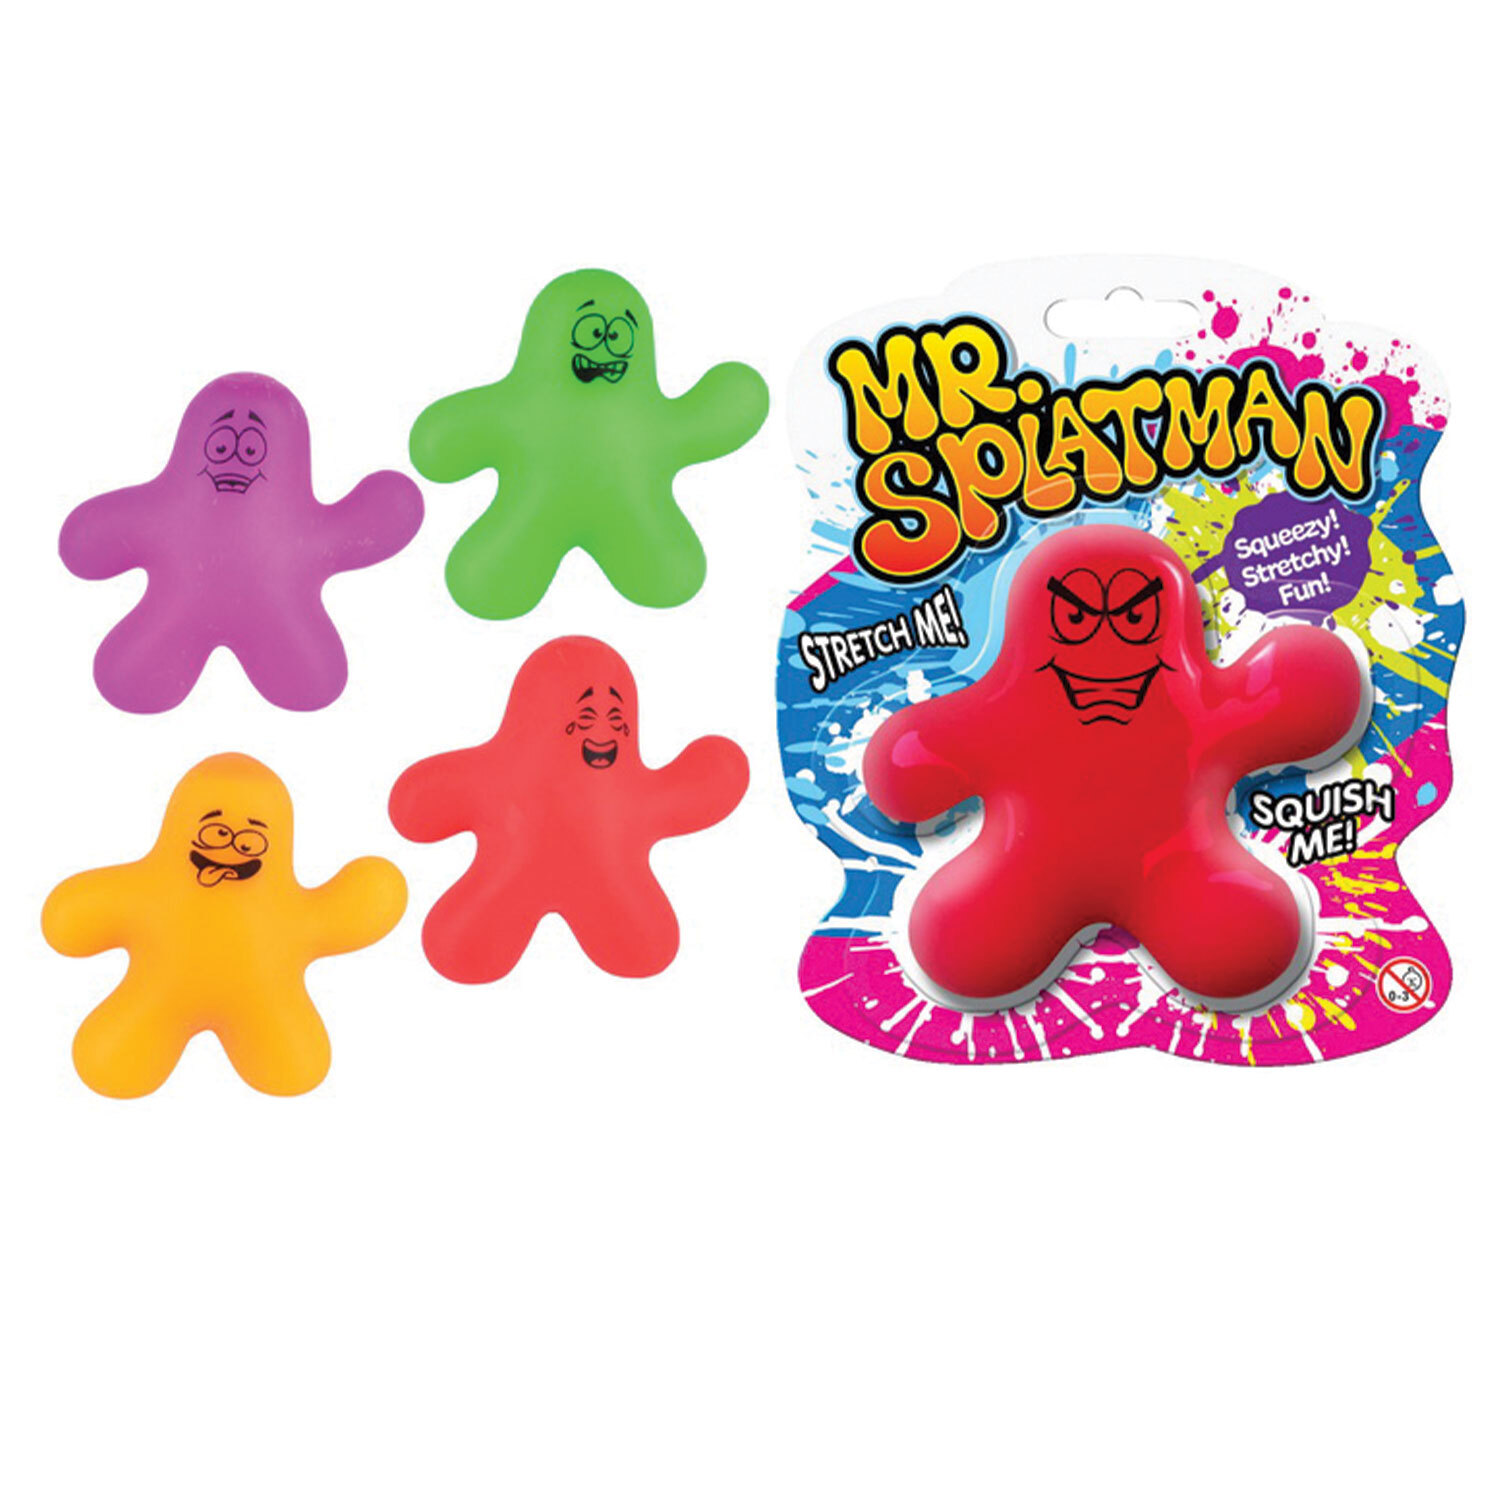 Single Mr Splatman Toy in Assorted styles Image